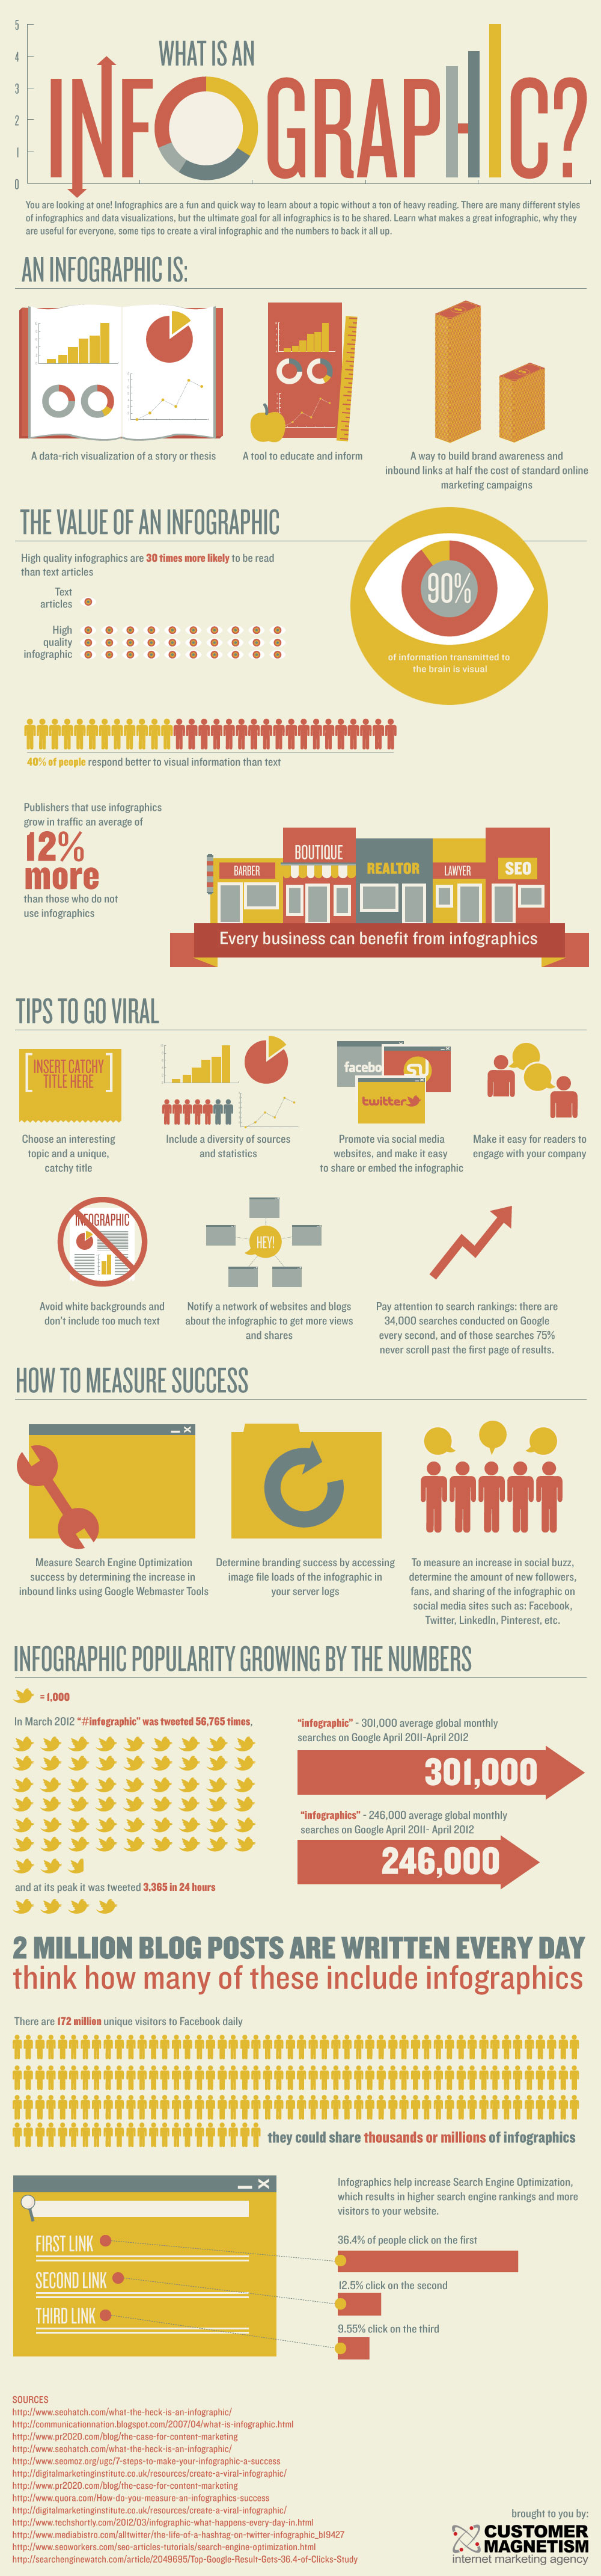 10-ways-to-use-infographics